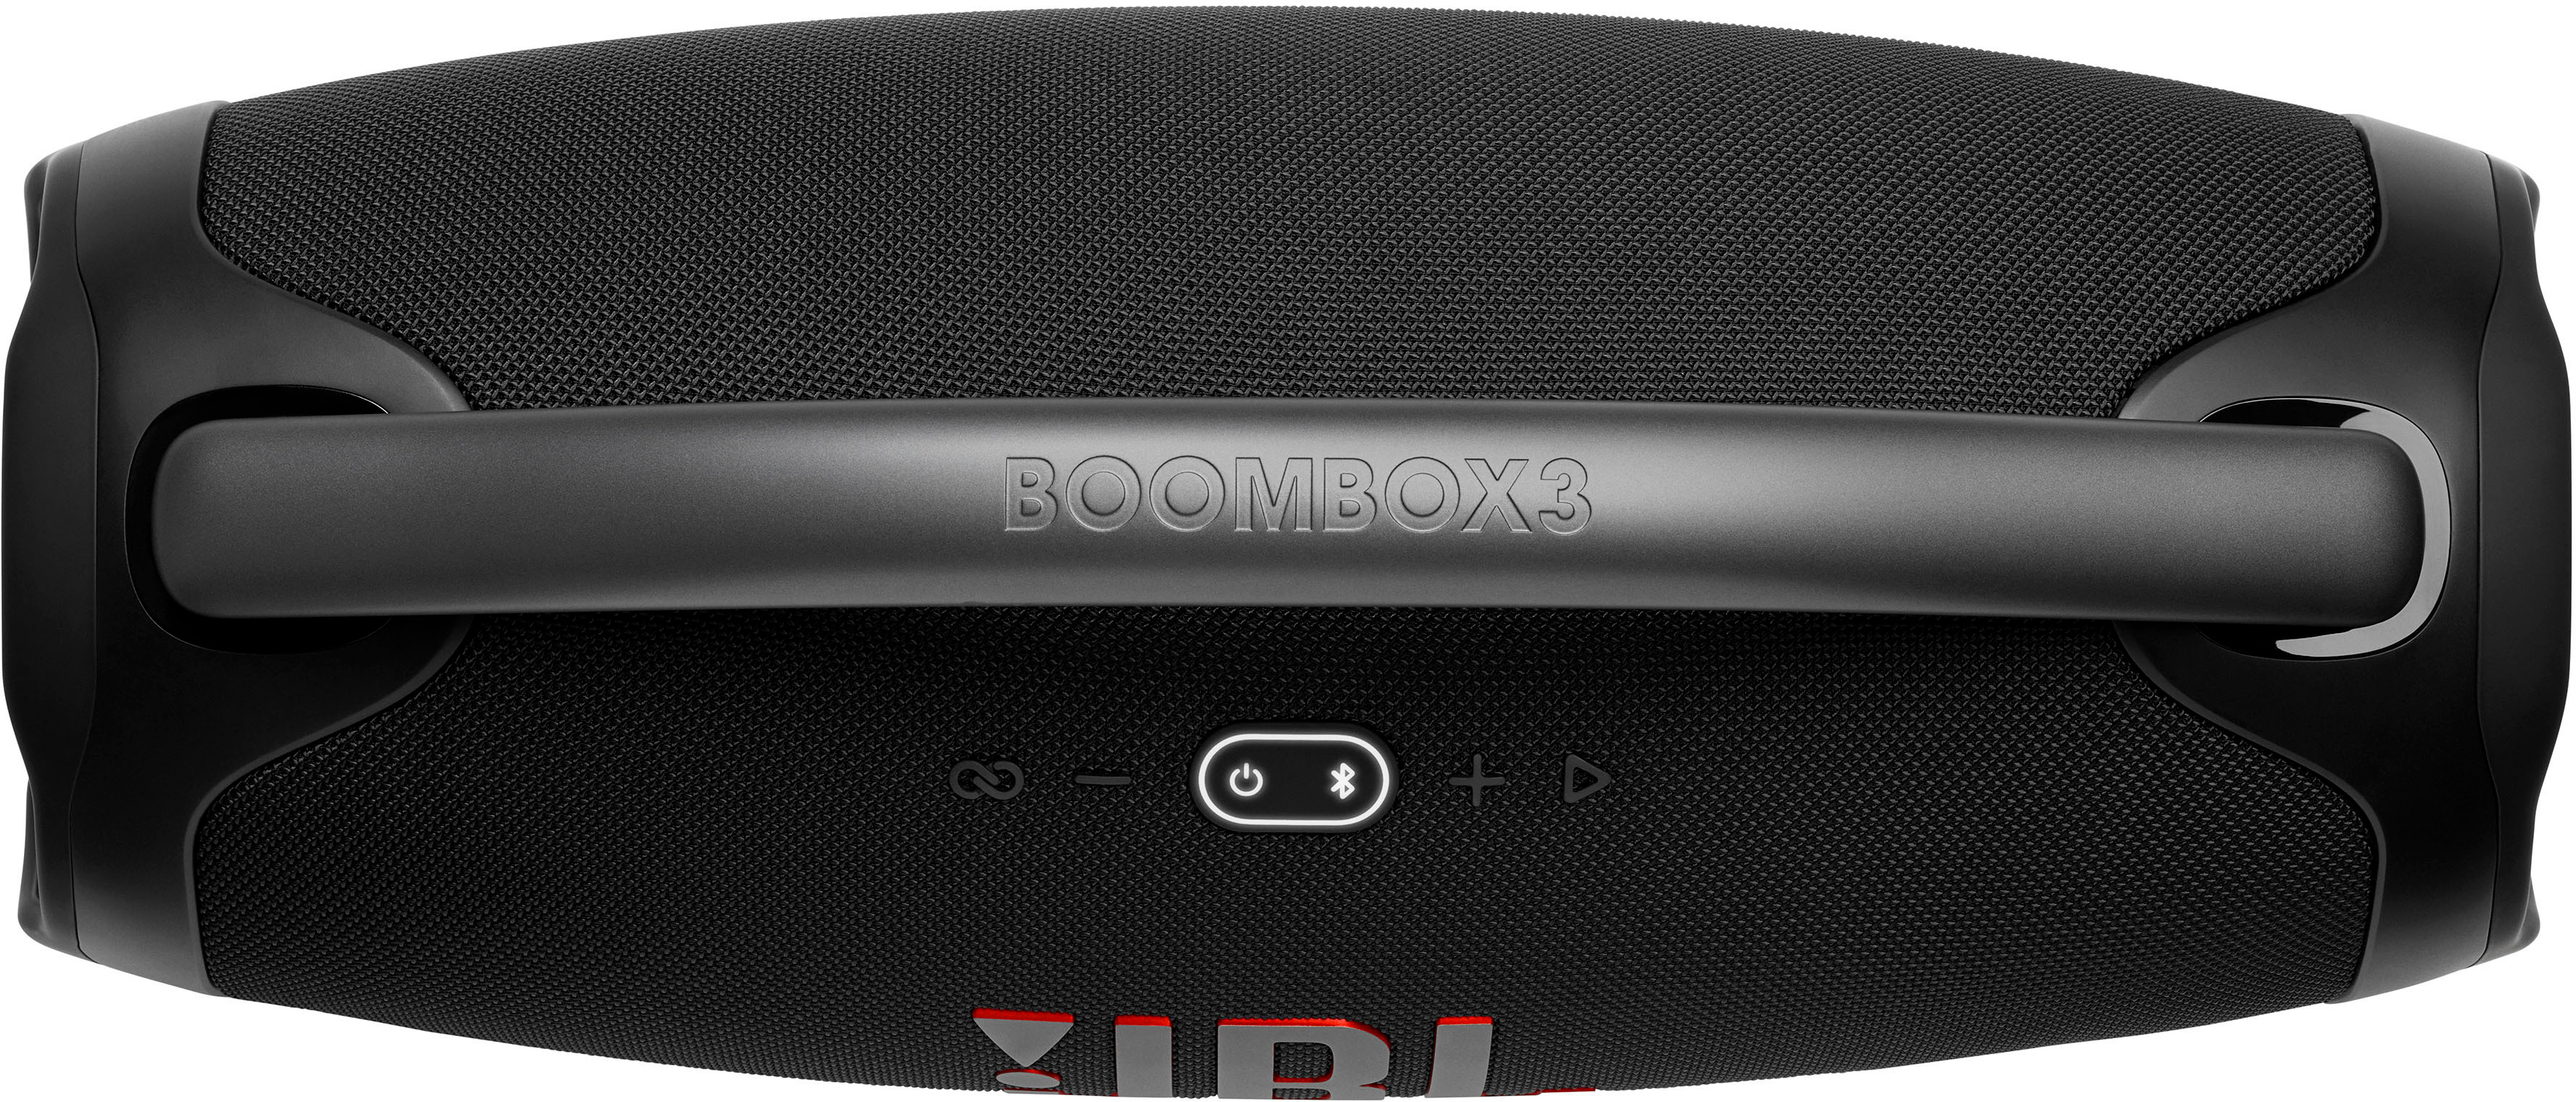 JBL Boombox 3 Wi Fi in action👌💪 : r/JBL